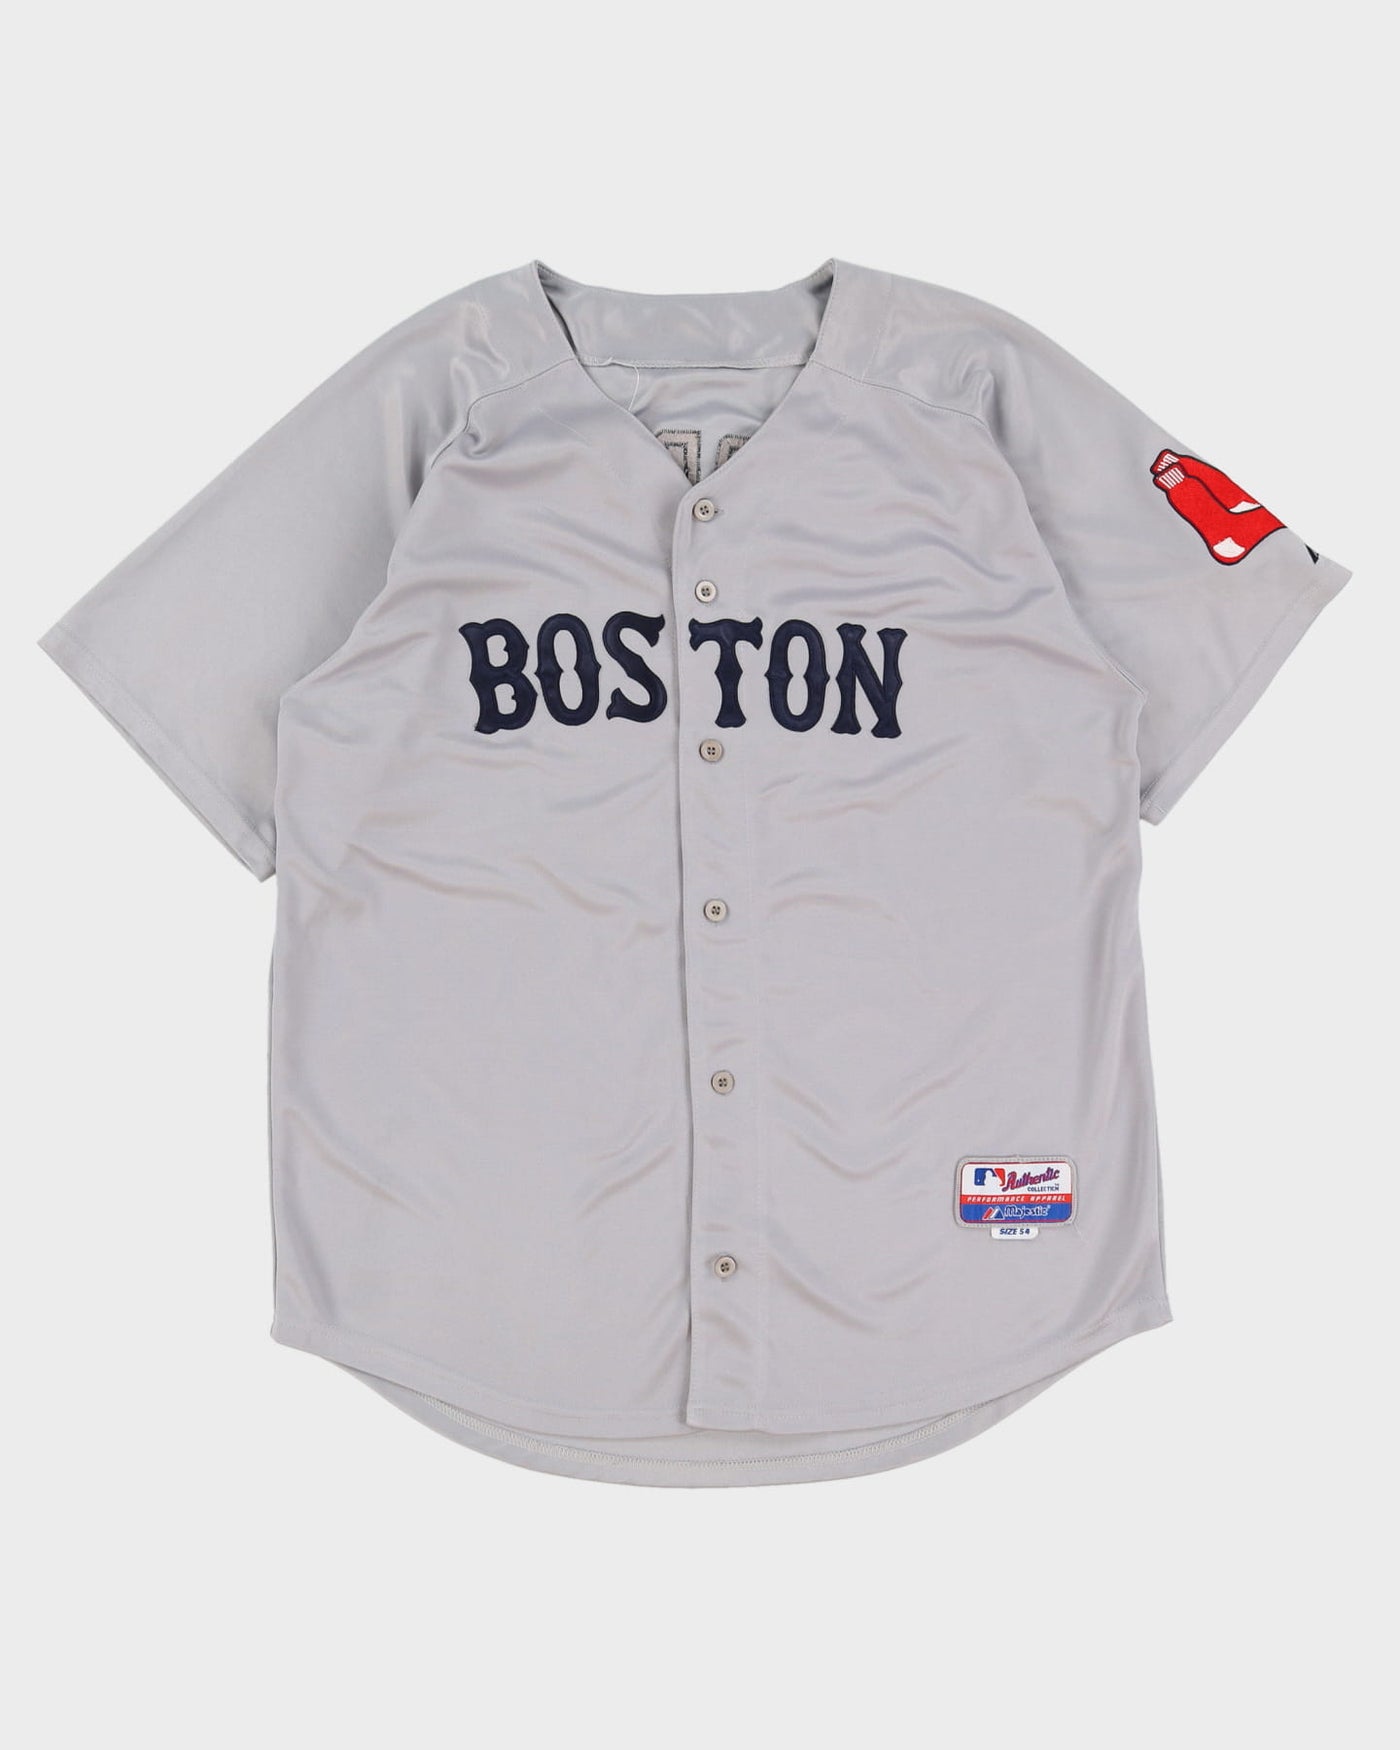 MLB Boston Red Sox Dustin Pedroia #15 Grey Baseball Jersey - XL